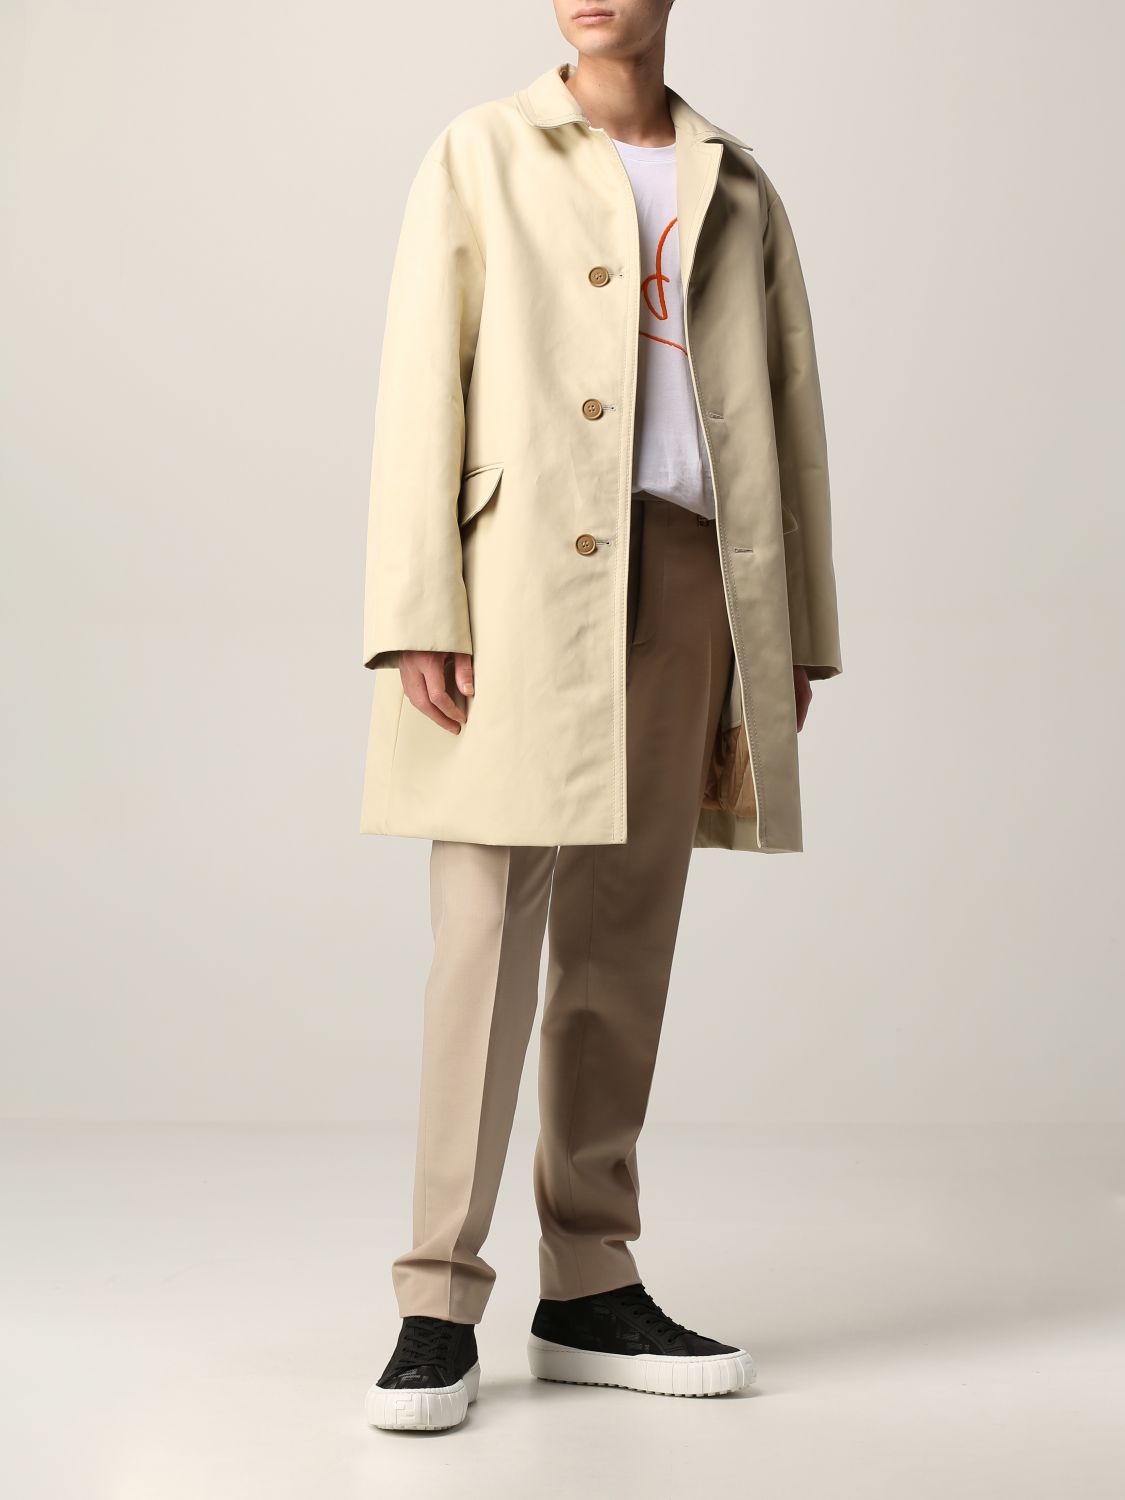 FENDI: Trench coat men | Trench Coat Fendi Men Yellow Cream | Trench ...